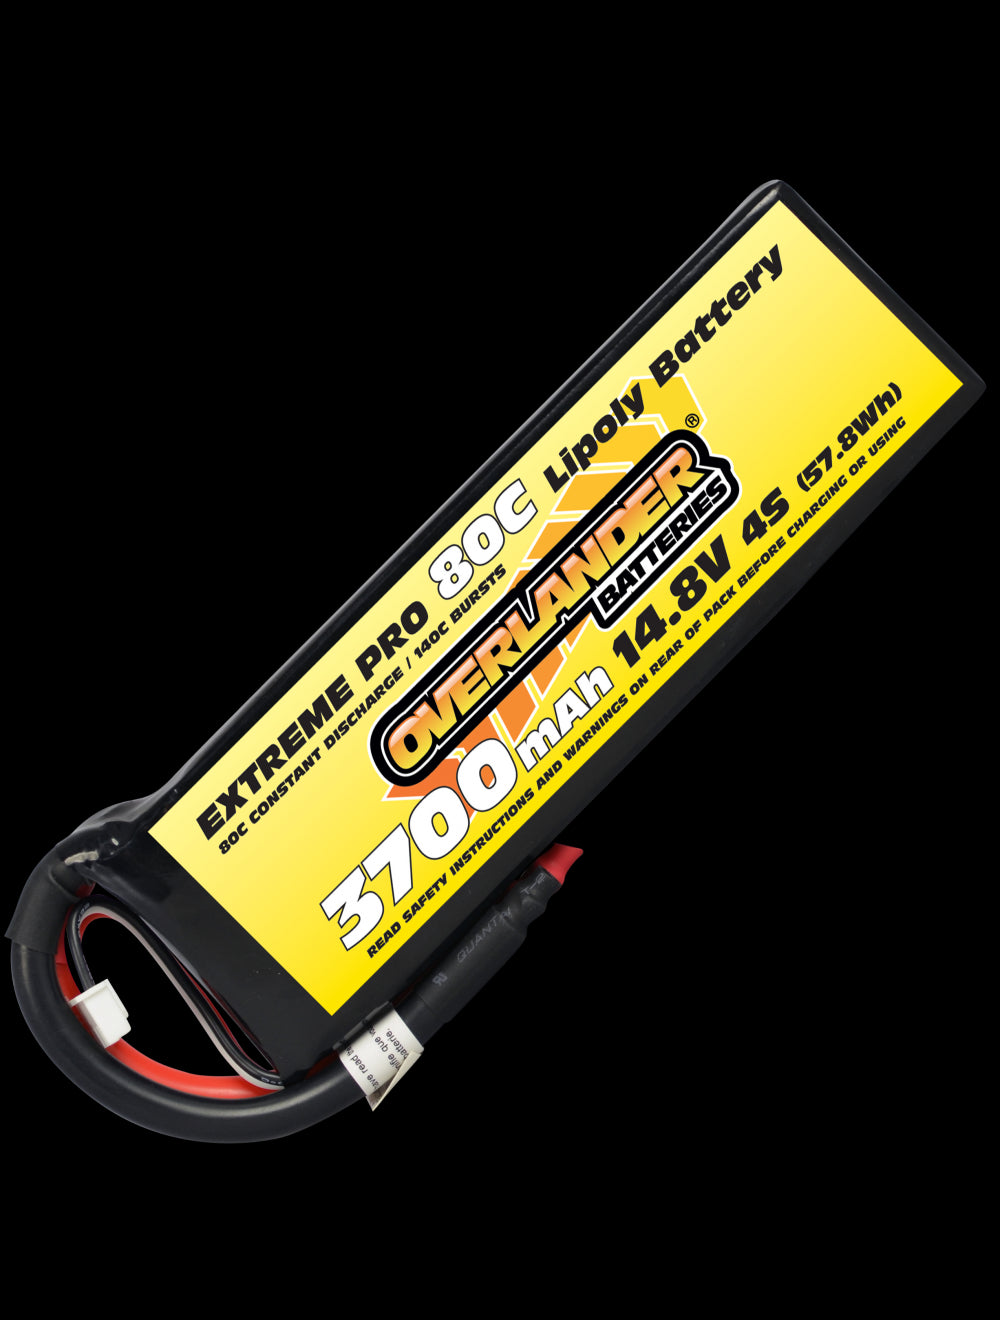 Overlander 3700mAh 14.8V 4S 80C Extreme Pro LiPo Battery - Deans Connector 534